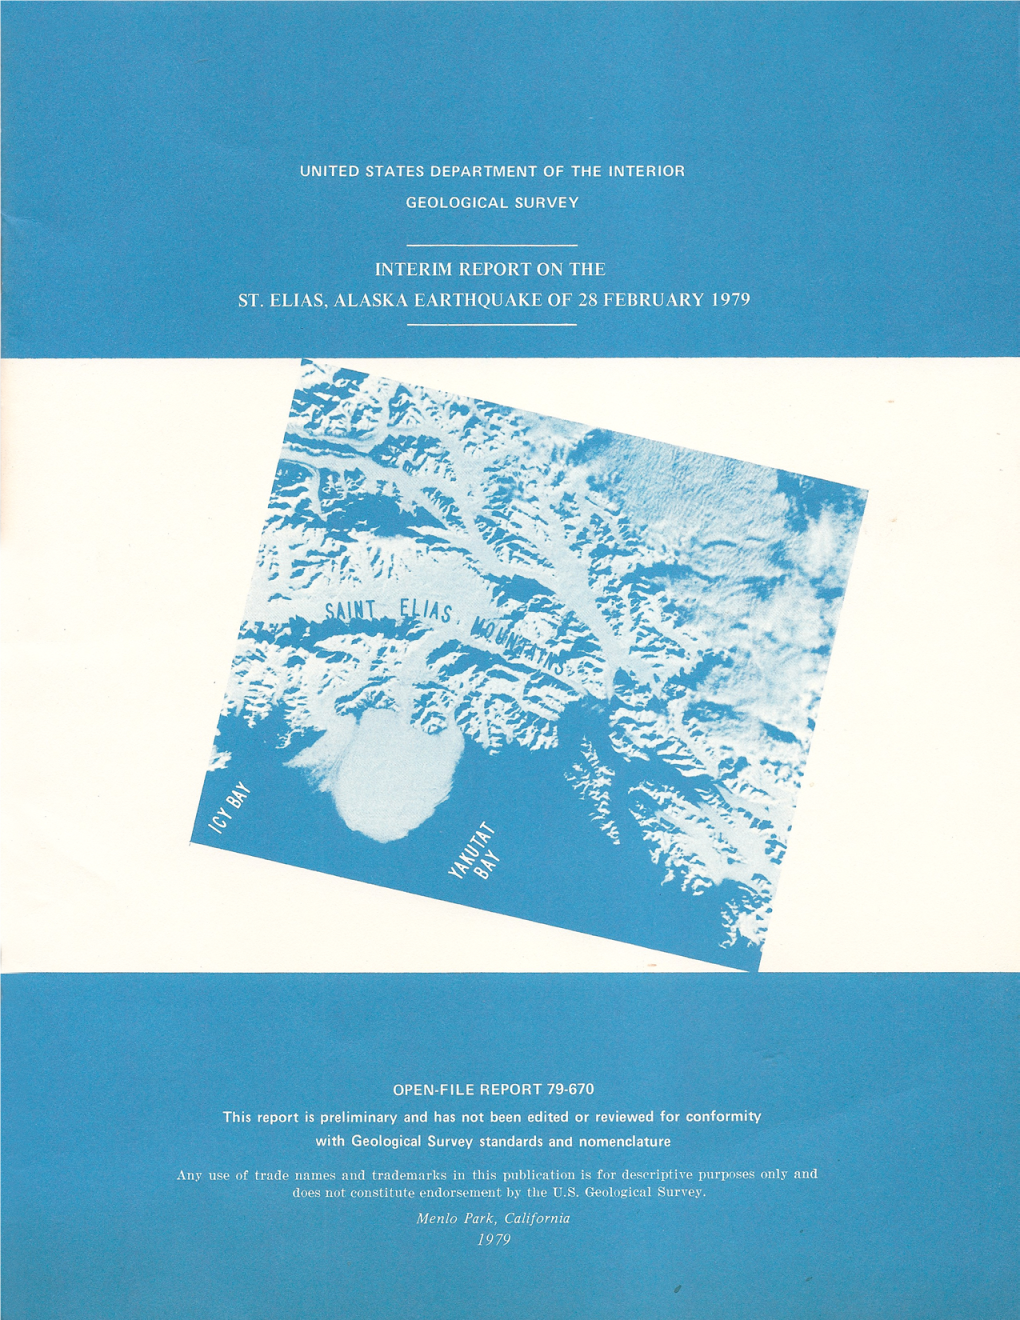 Interim Report on the St. Elias, Alaska Earthquake of 28 February 1979